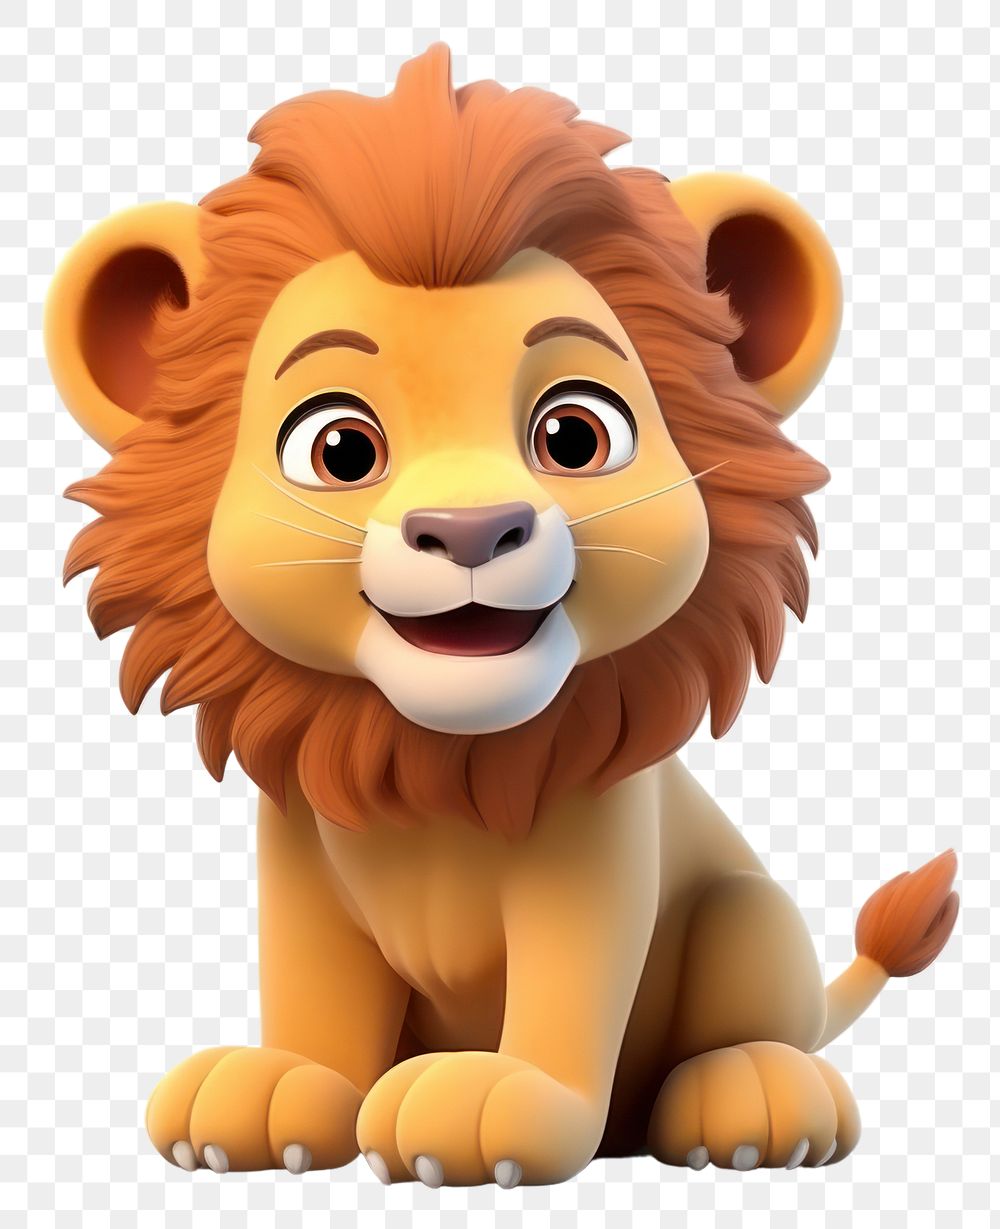 Cheerful Cartoon Lion with a Playful Demeanor | MUSE AI